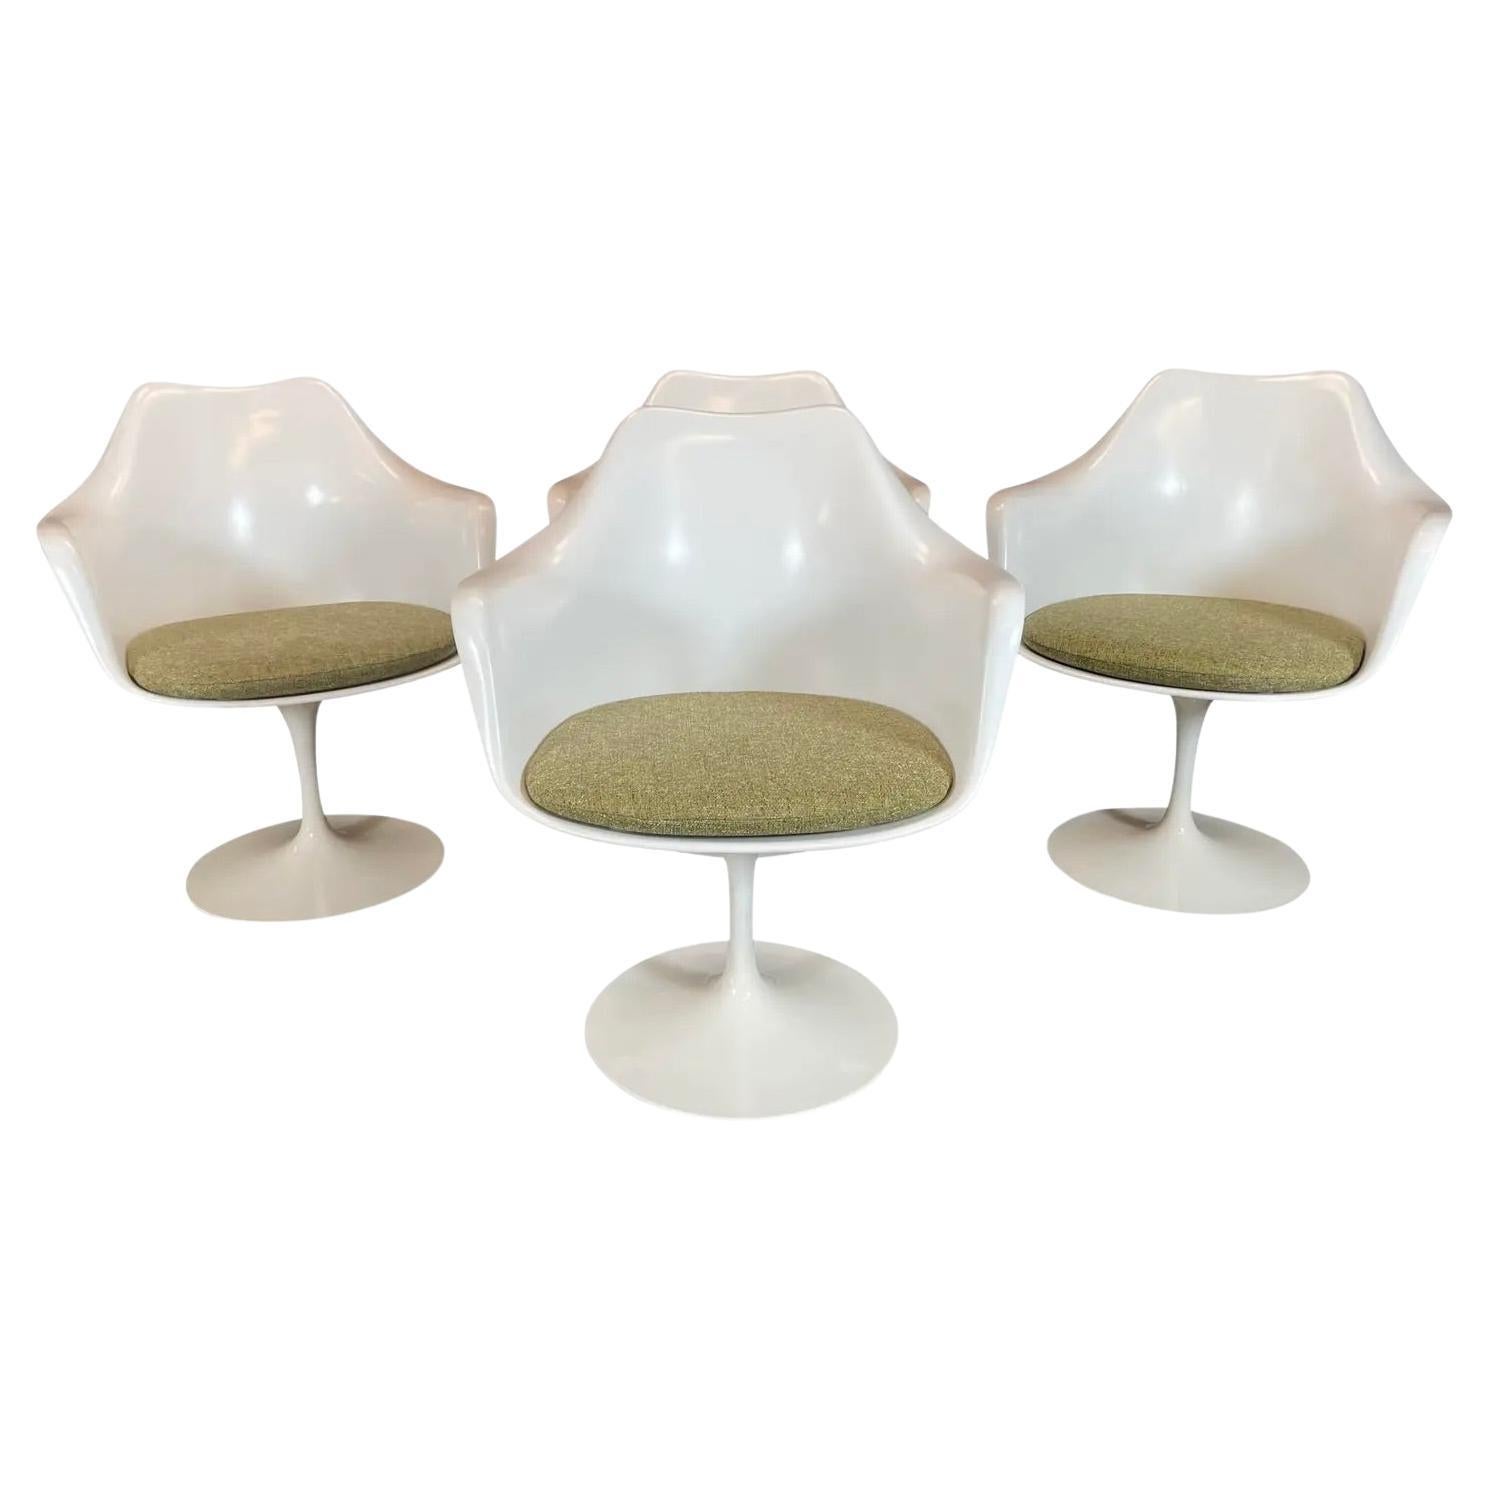 4 Vintage Mid Century Modern Swivel "Tulip" Chairs by Eero Saarinen for Knoll